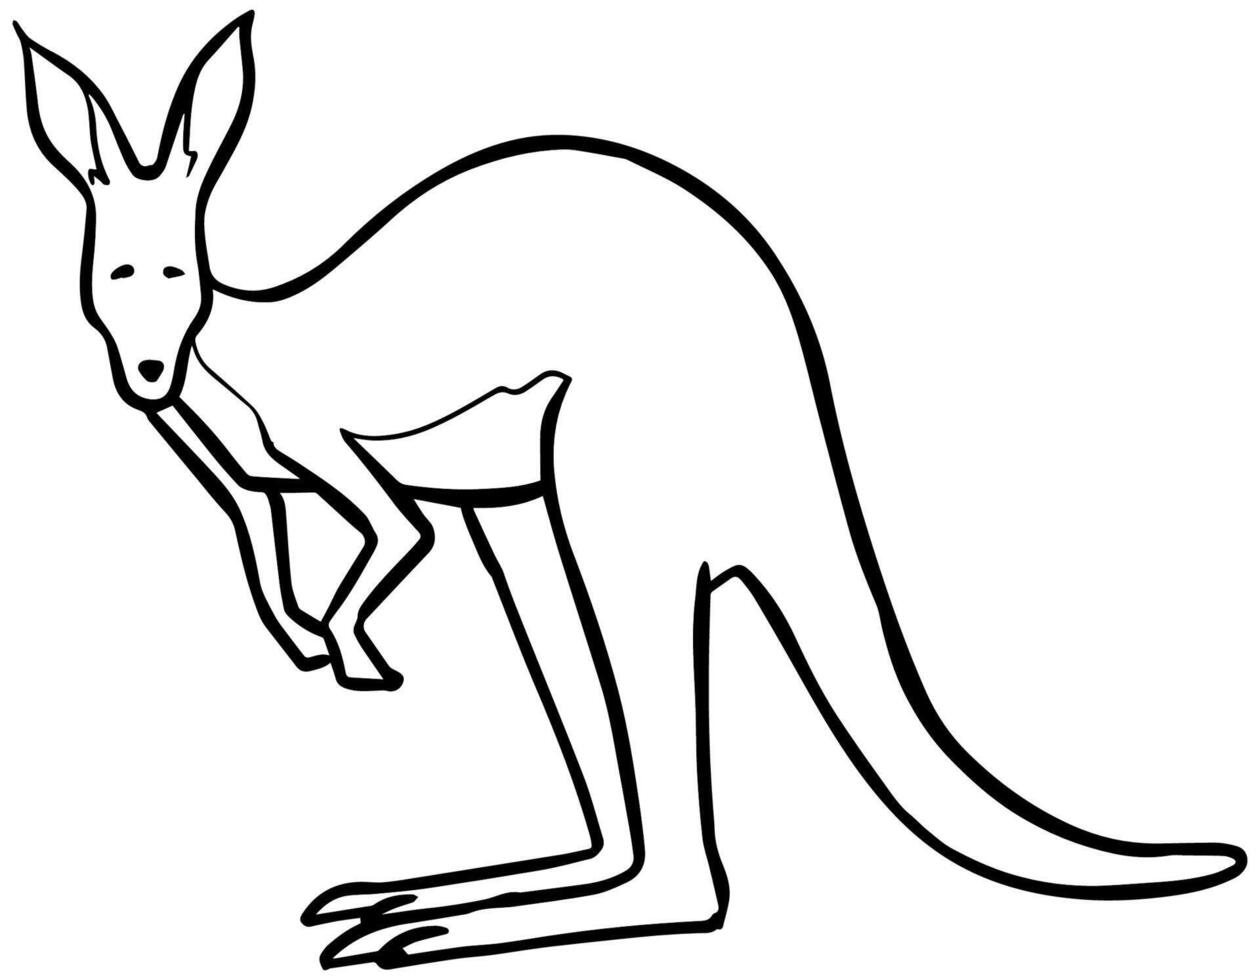 Hand drawn standing kangaroo. Vector illustration.